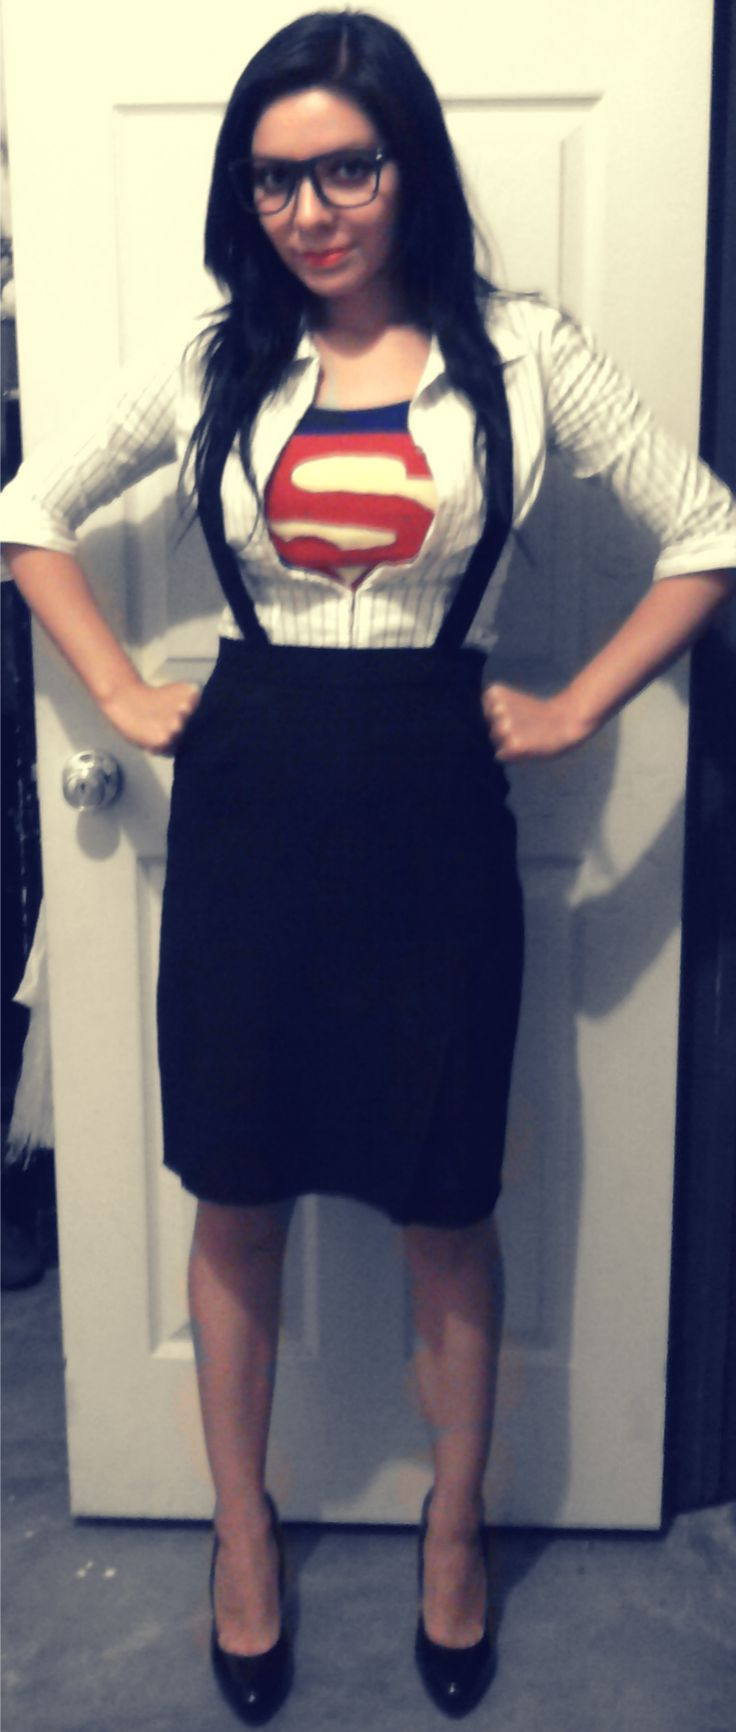 Best ideas about Female Superhero Costume DIY
. Save or Pin Best 20 Superhero costumes women ideas on Pinterest Now.